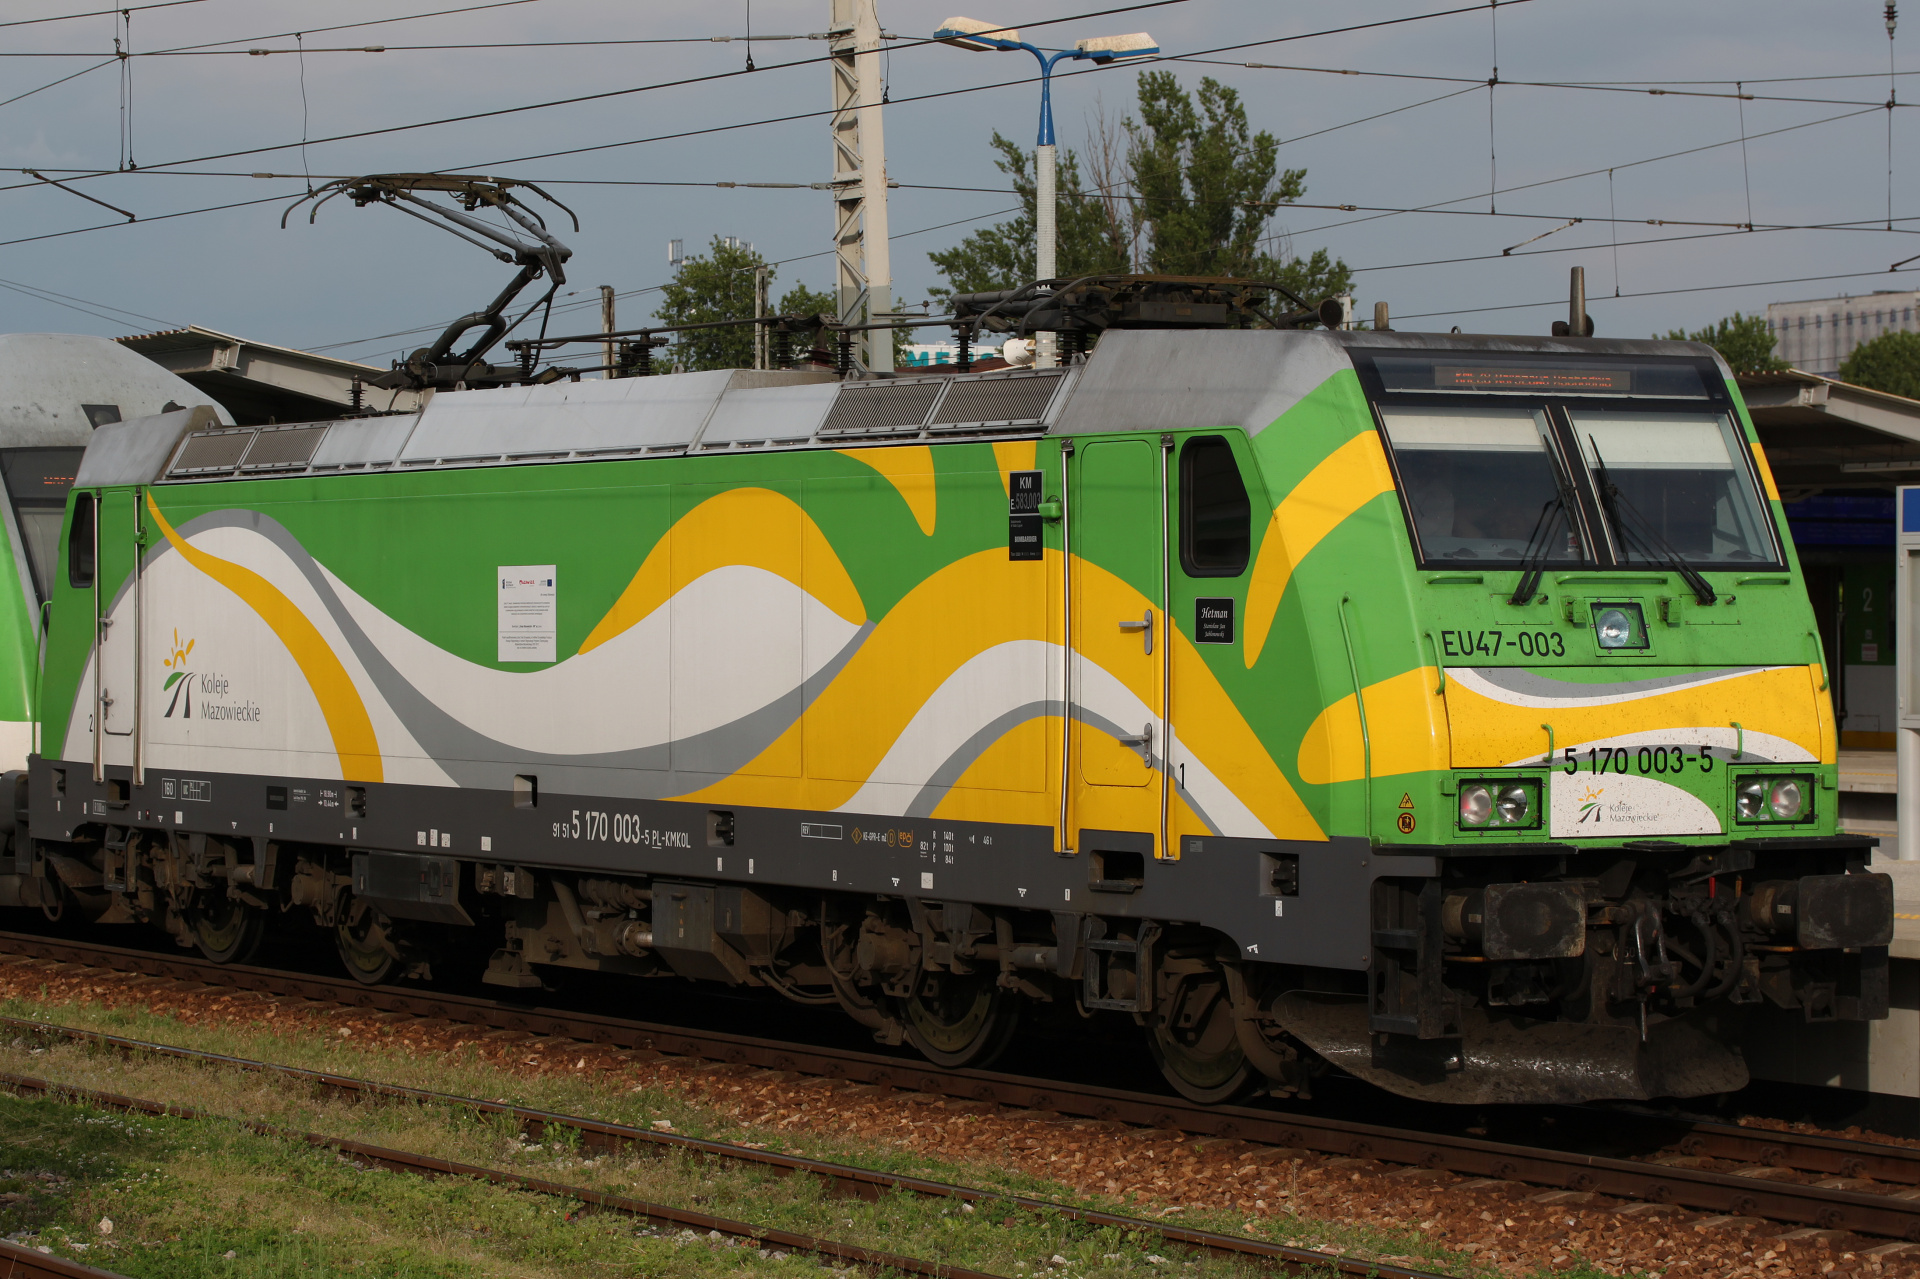 P160DC E583 EU47-003 (Hetman) (Vehicles » Trains and Locomotives » Bombardier TRAXX)